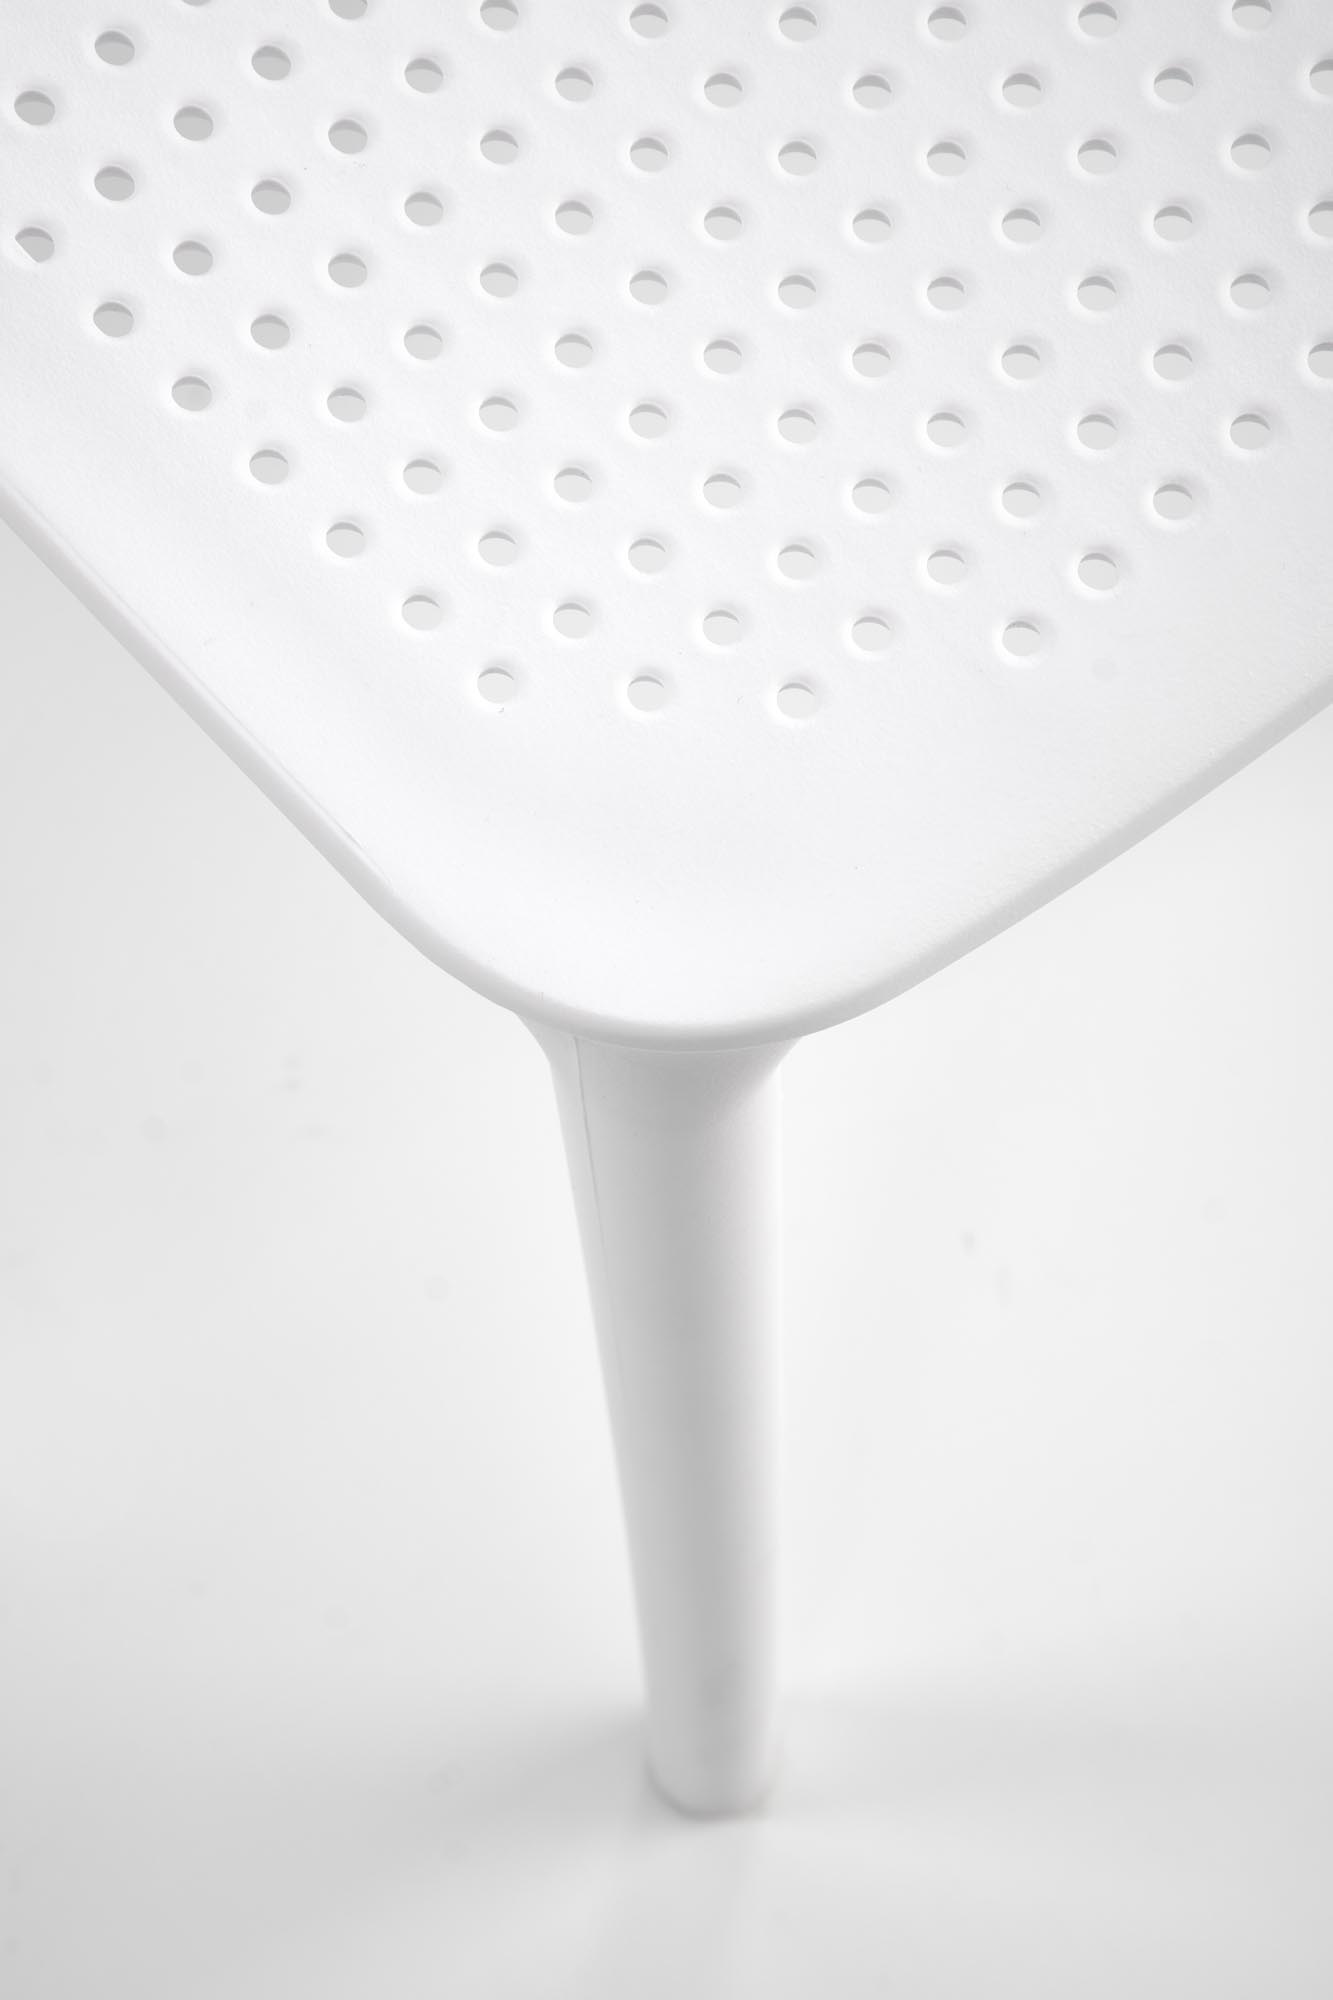 Scaun plastic K514 - Alb  Židle z tworzywa k514 - Alb